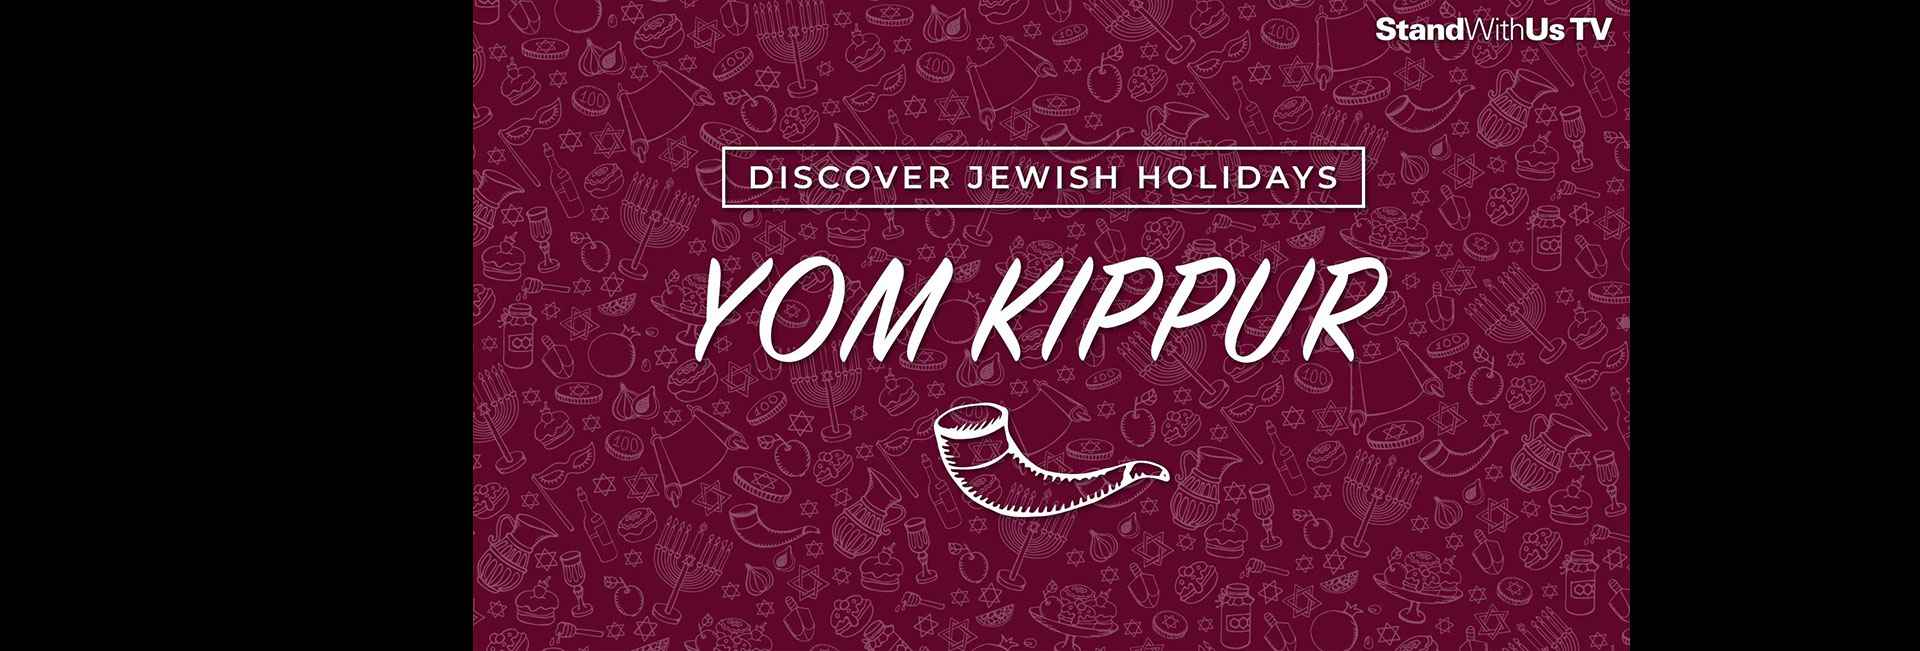 Discover Jewish Holidays: Yom Kippur